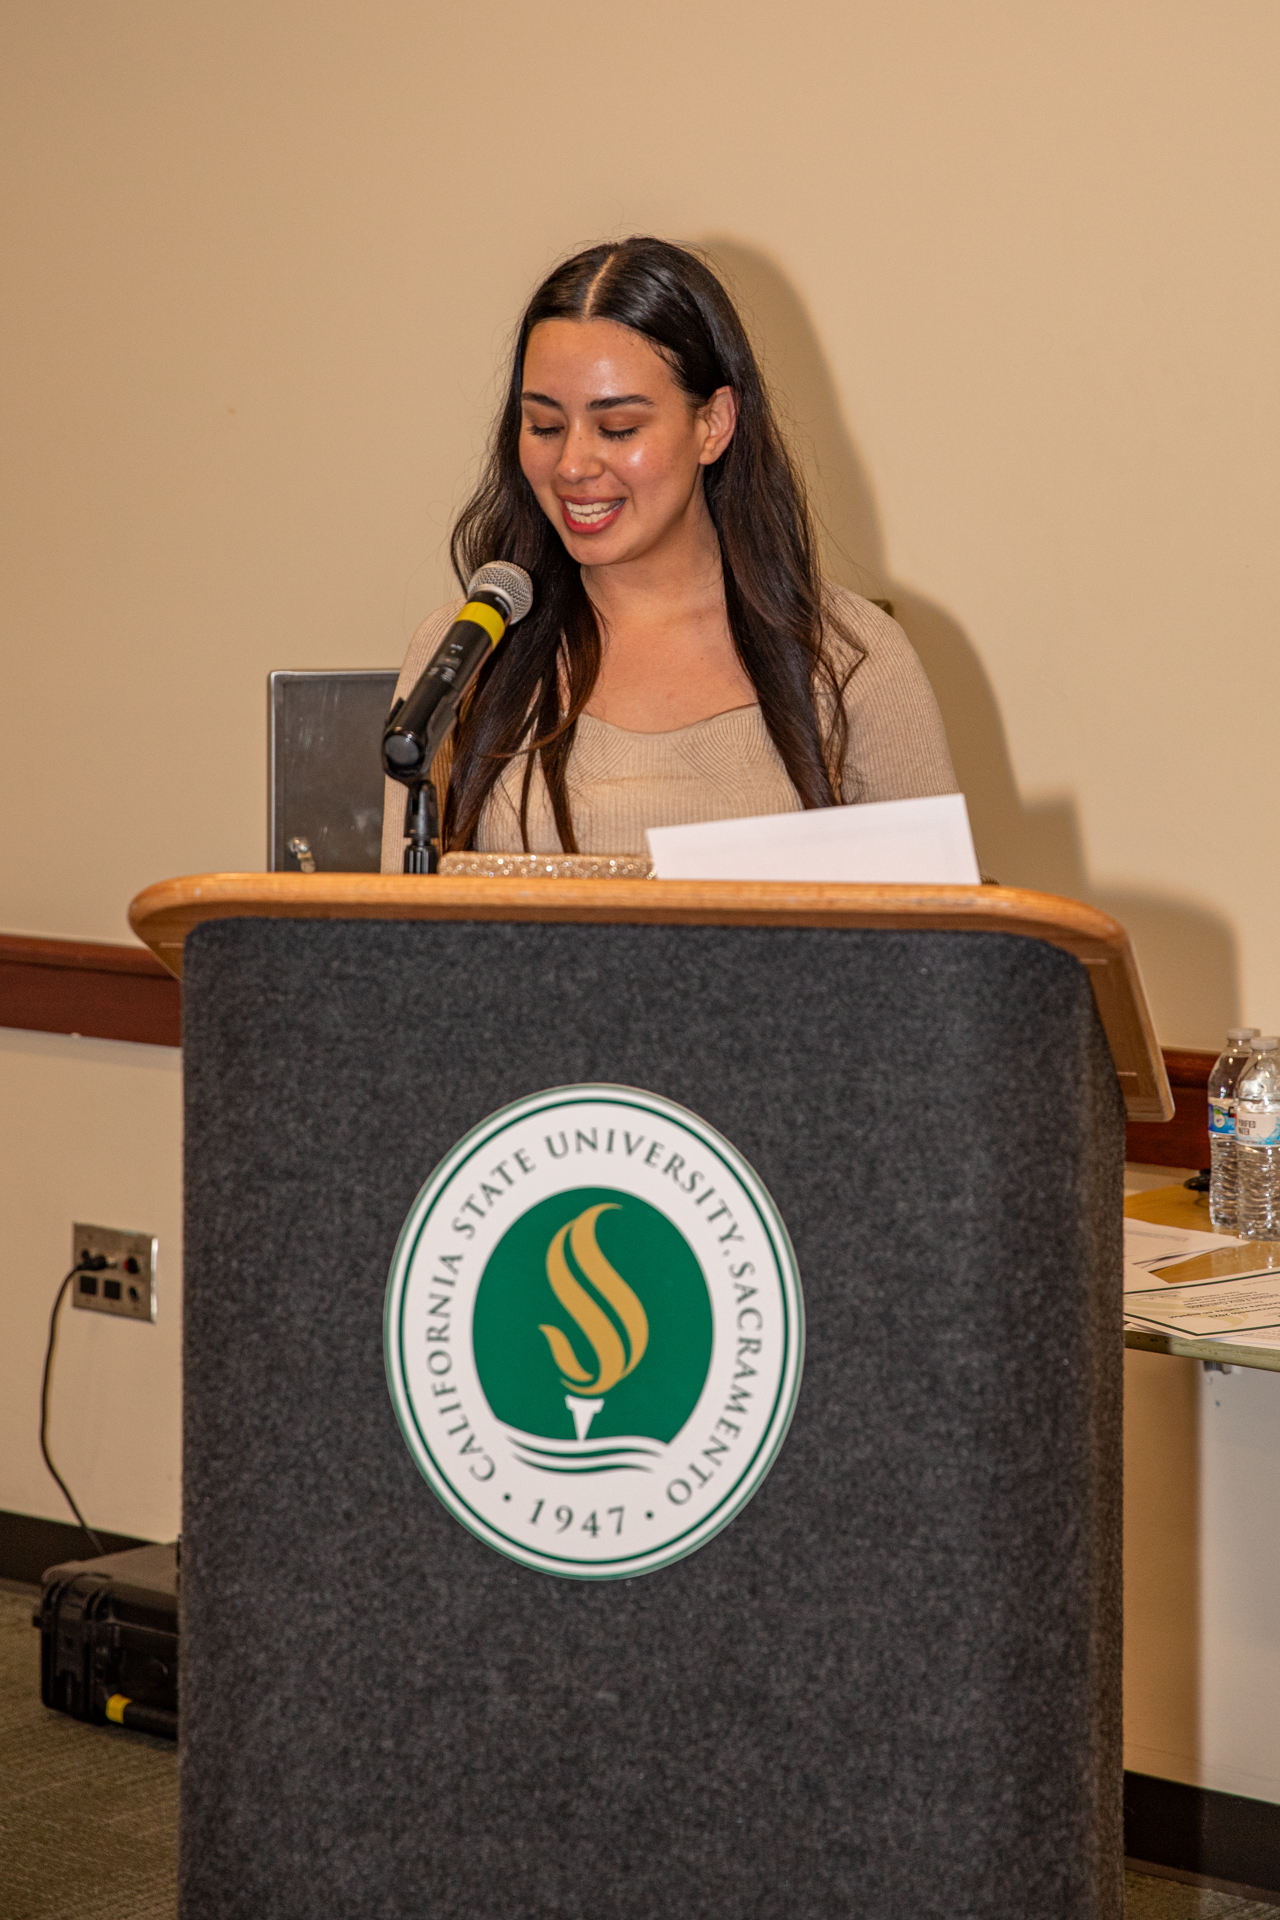 A Voces de Sacramento competition participant reads her submission at the podium.